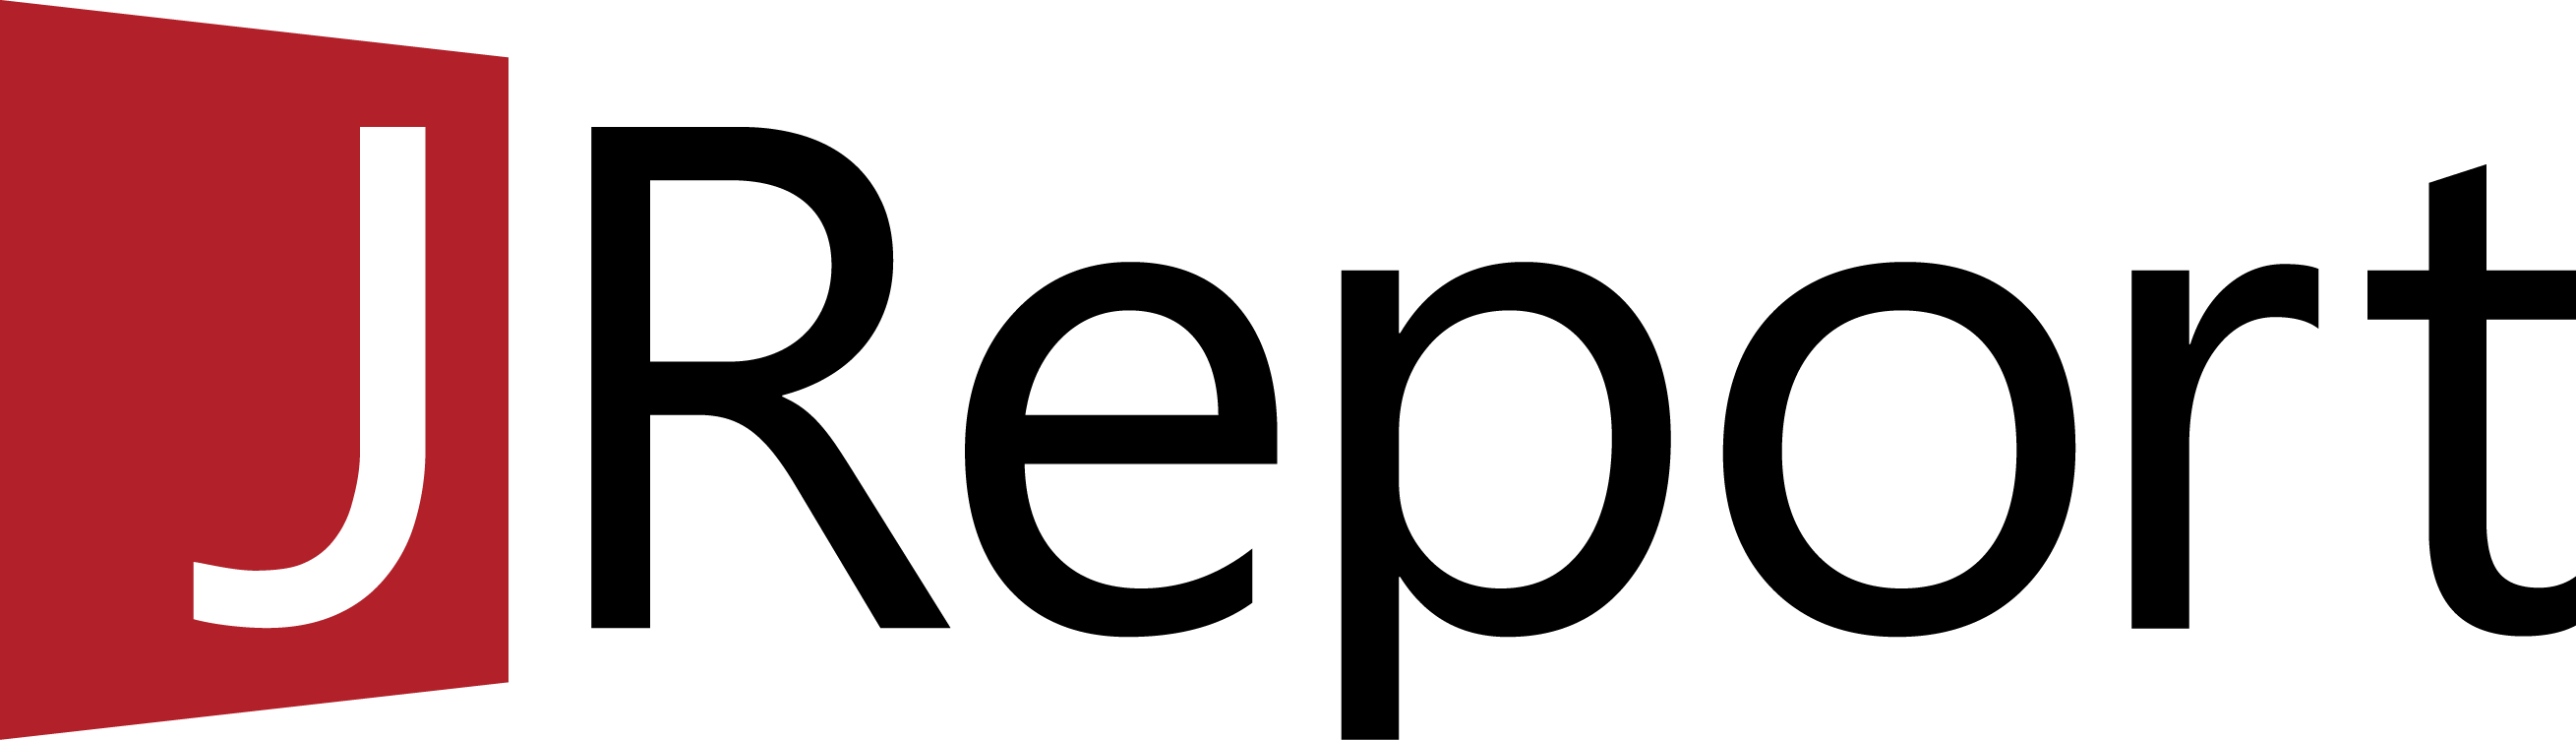 JReport logo